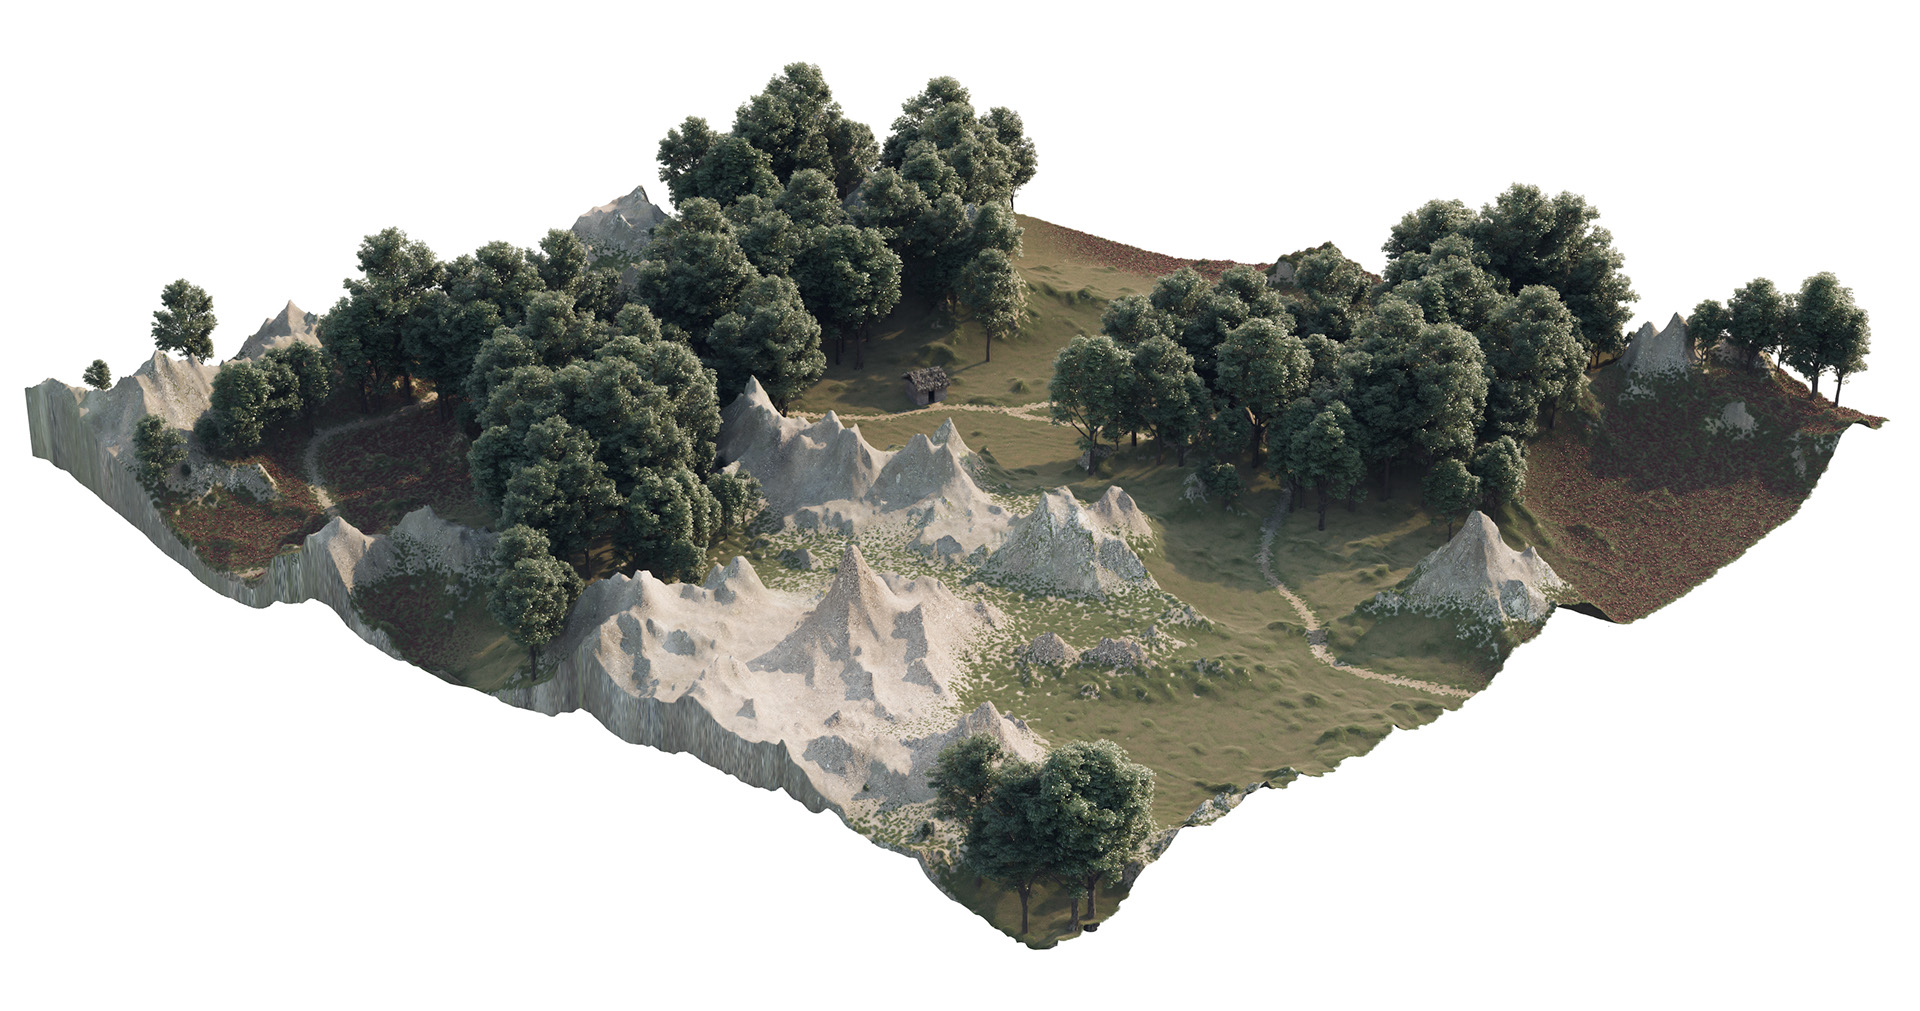 terrain location scattering Landscape 3D game design.